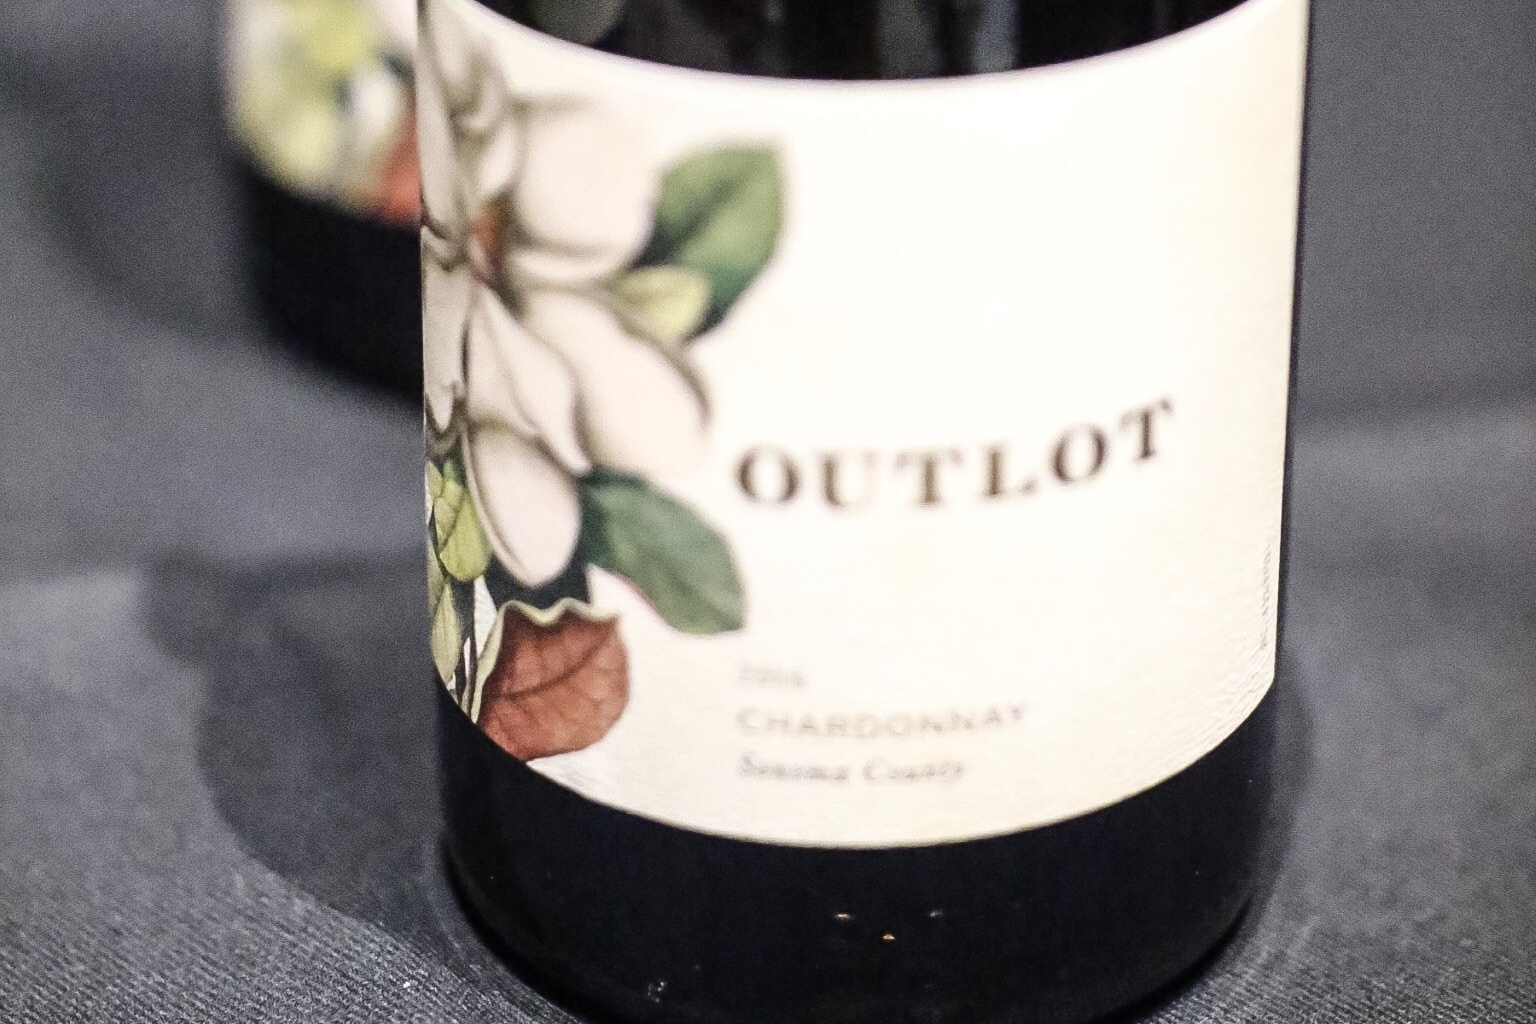 Outlot Chardonnay 2016